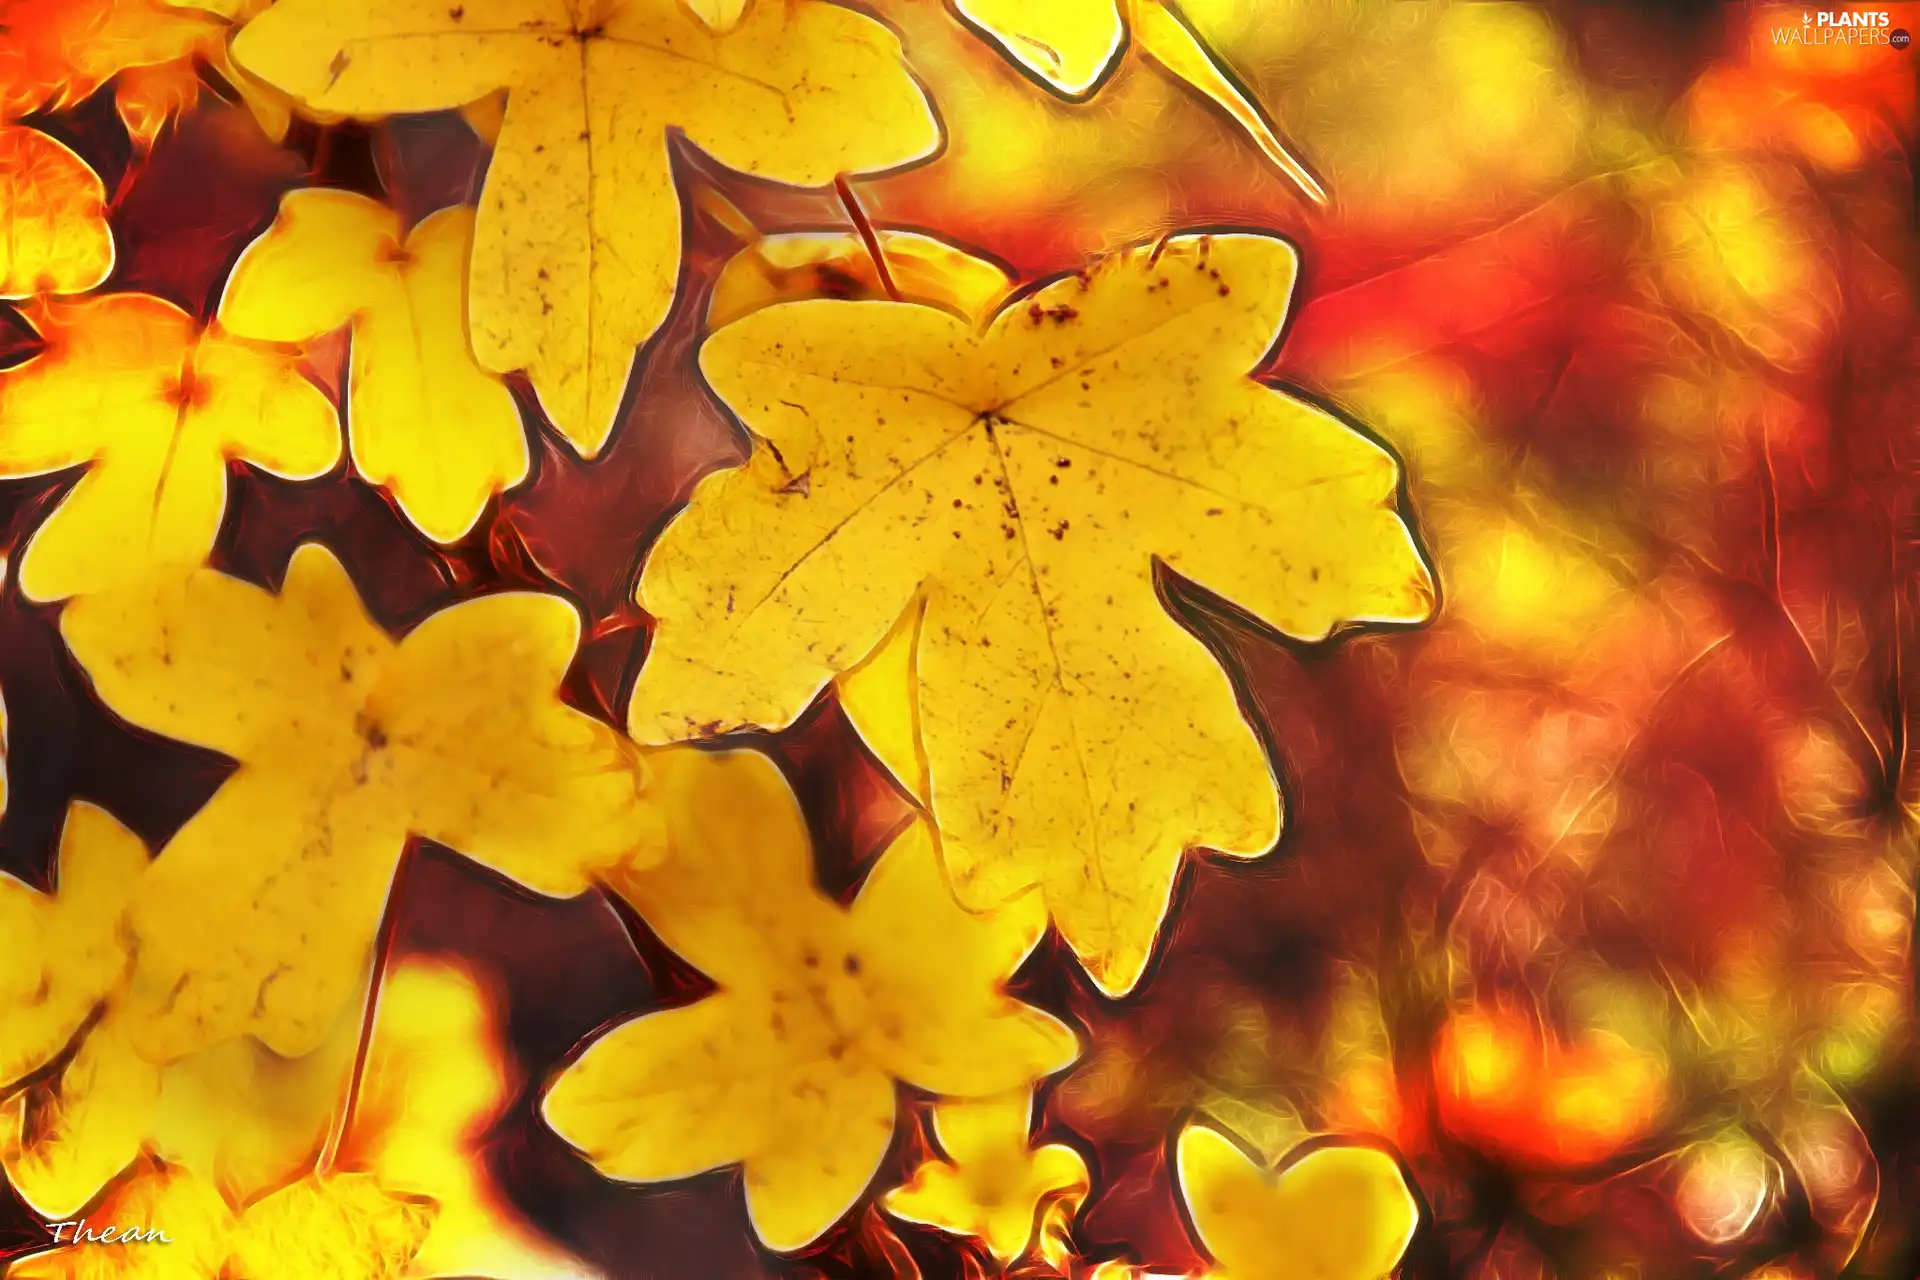 Fractalius, Yellow, Leaf